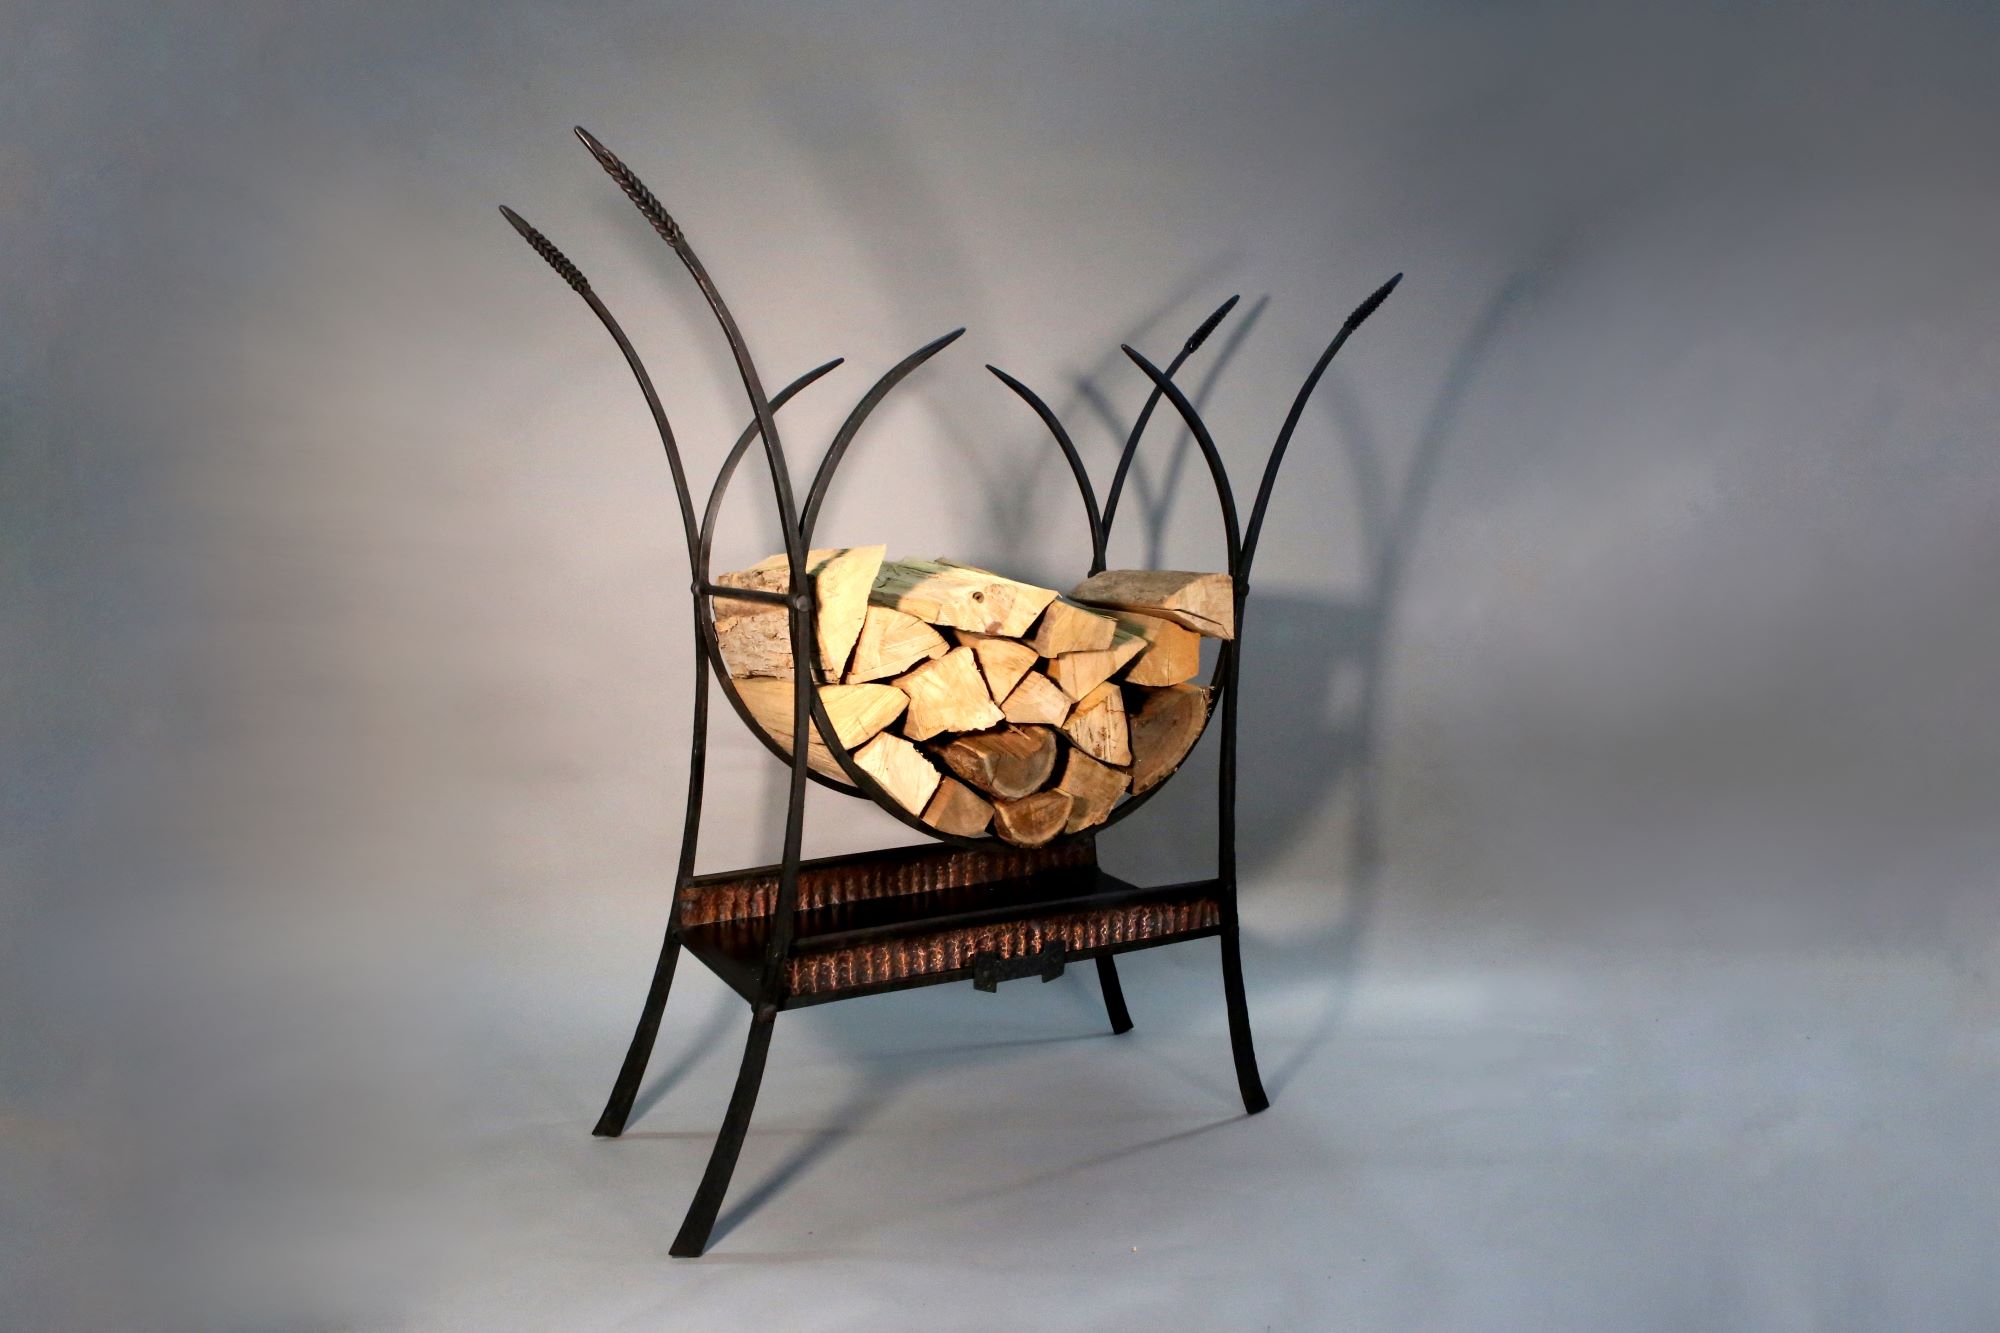 Log rack by Zachary Herberholz of ZH Fabrications.